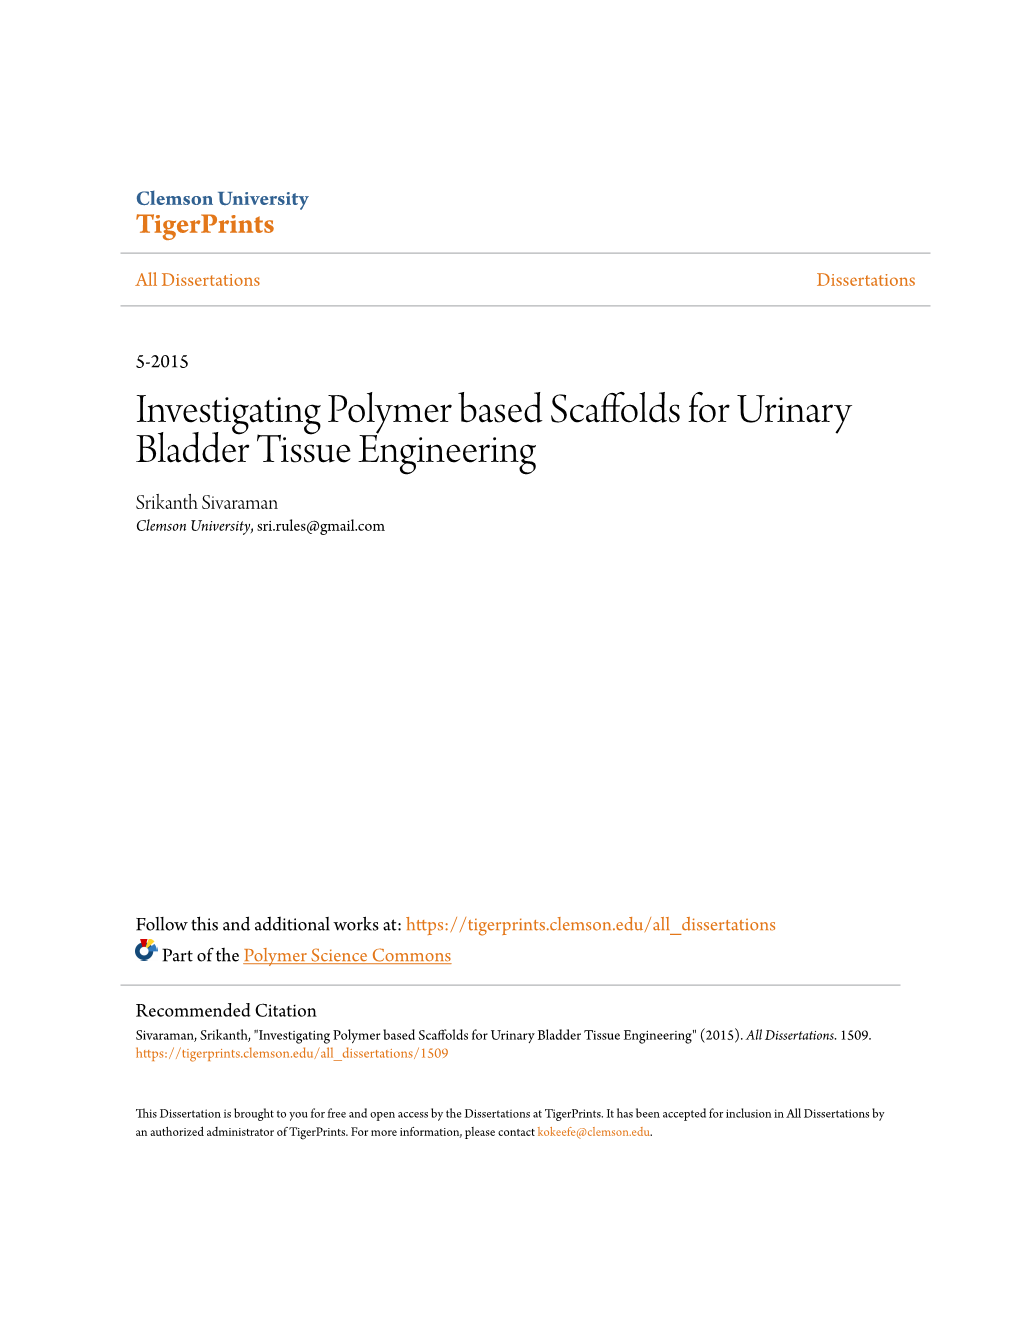 Investigating Polymer Based Scaffolds for Urinary Bladder Tissue Engineering Srikanth Sivaraman Clemson University, Sri.Rules@Gmail.Com